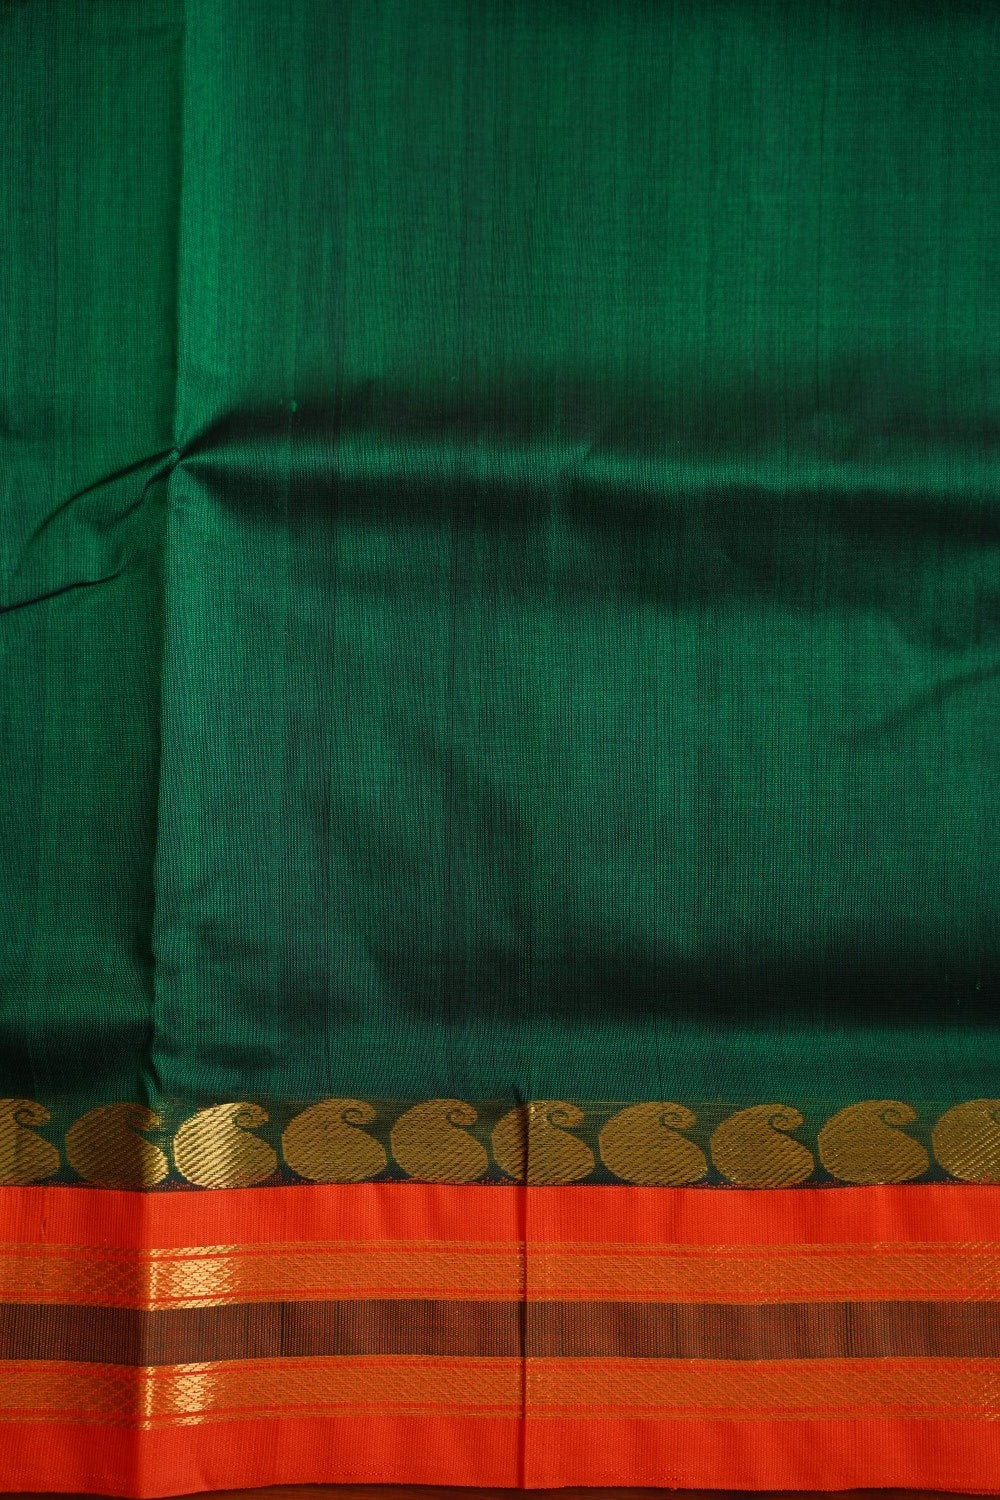 10 yards Kanchi Handloom Silk Cotton Saree PC11090